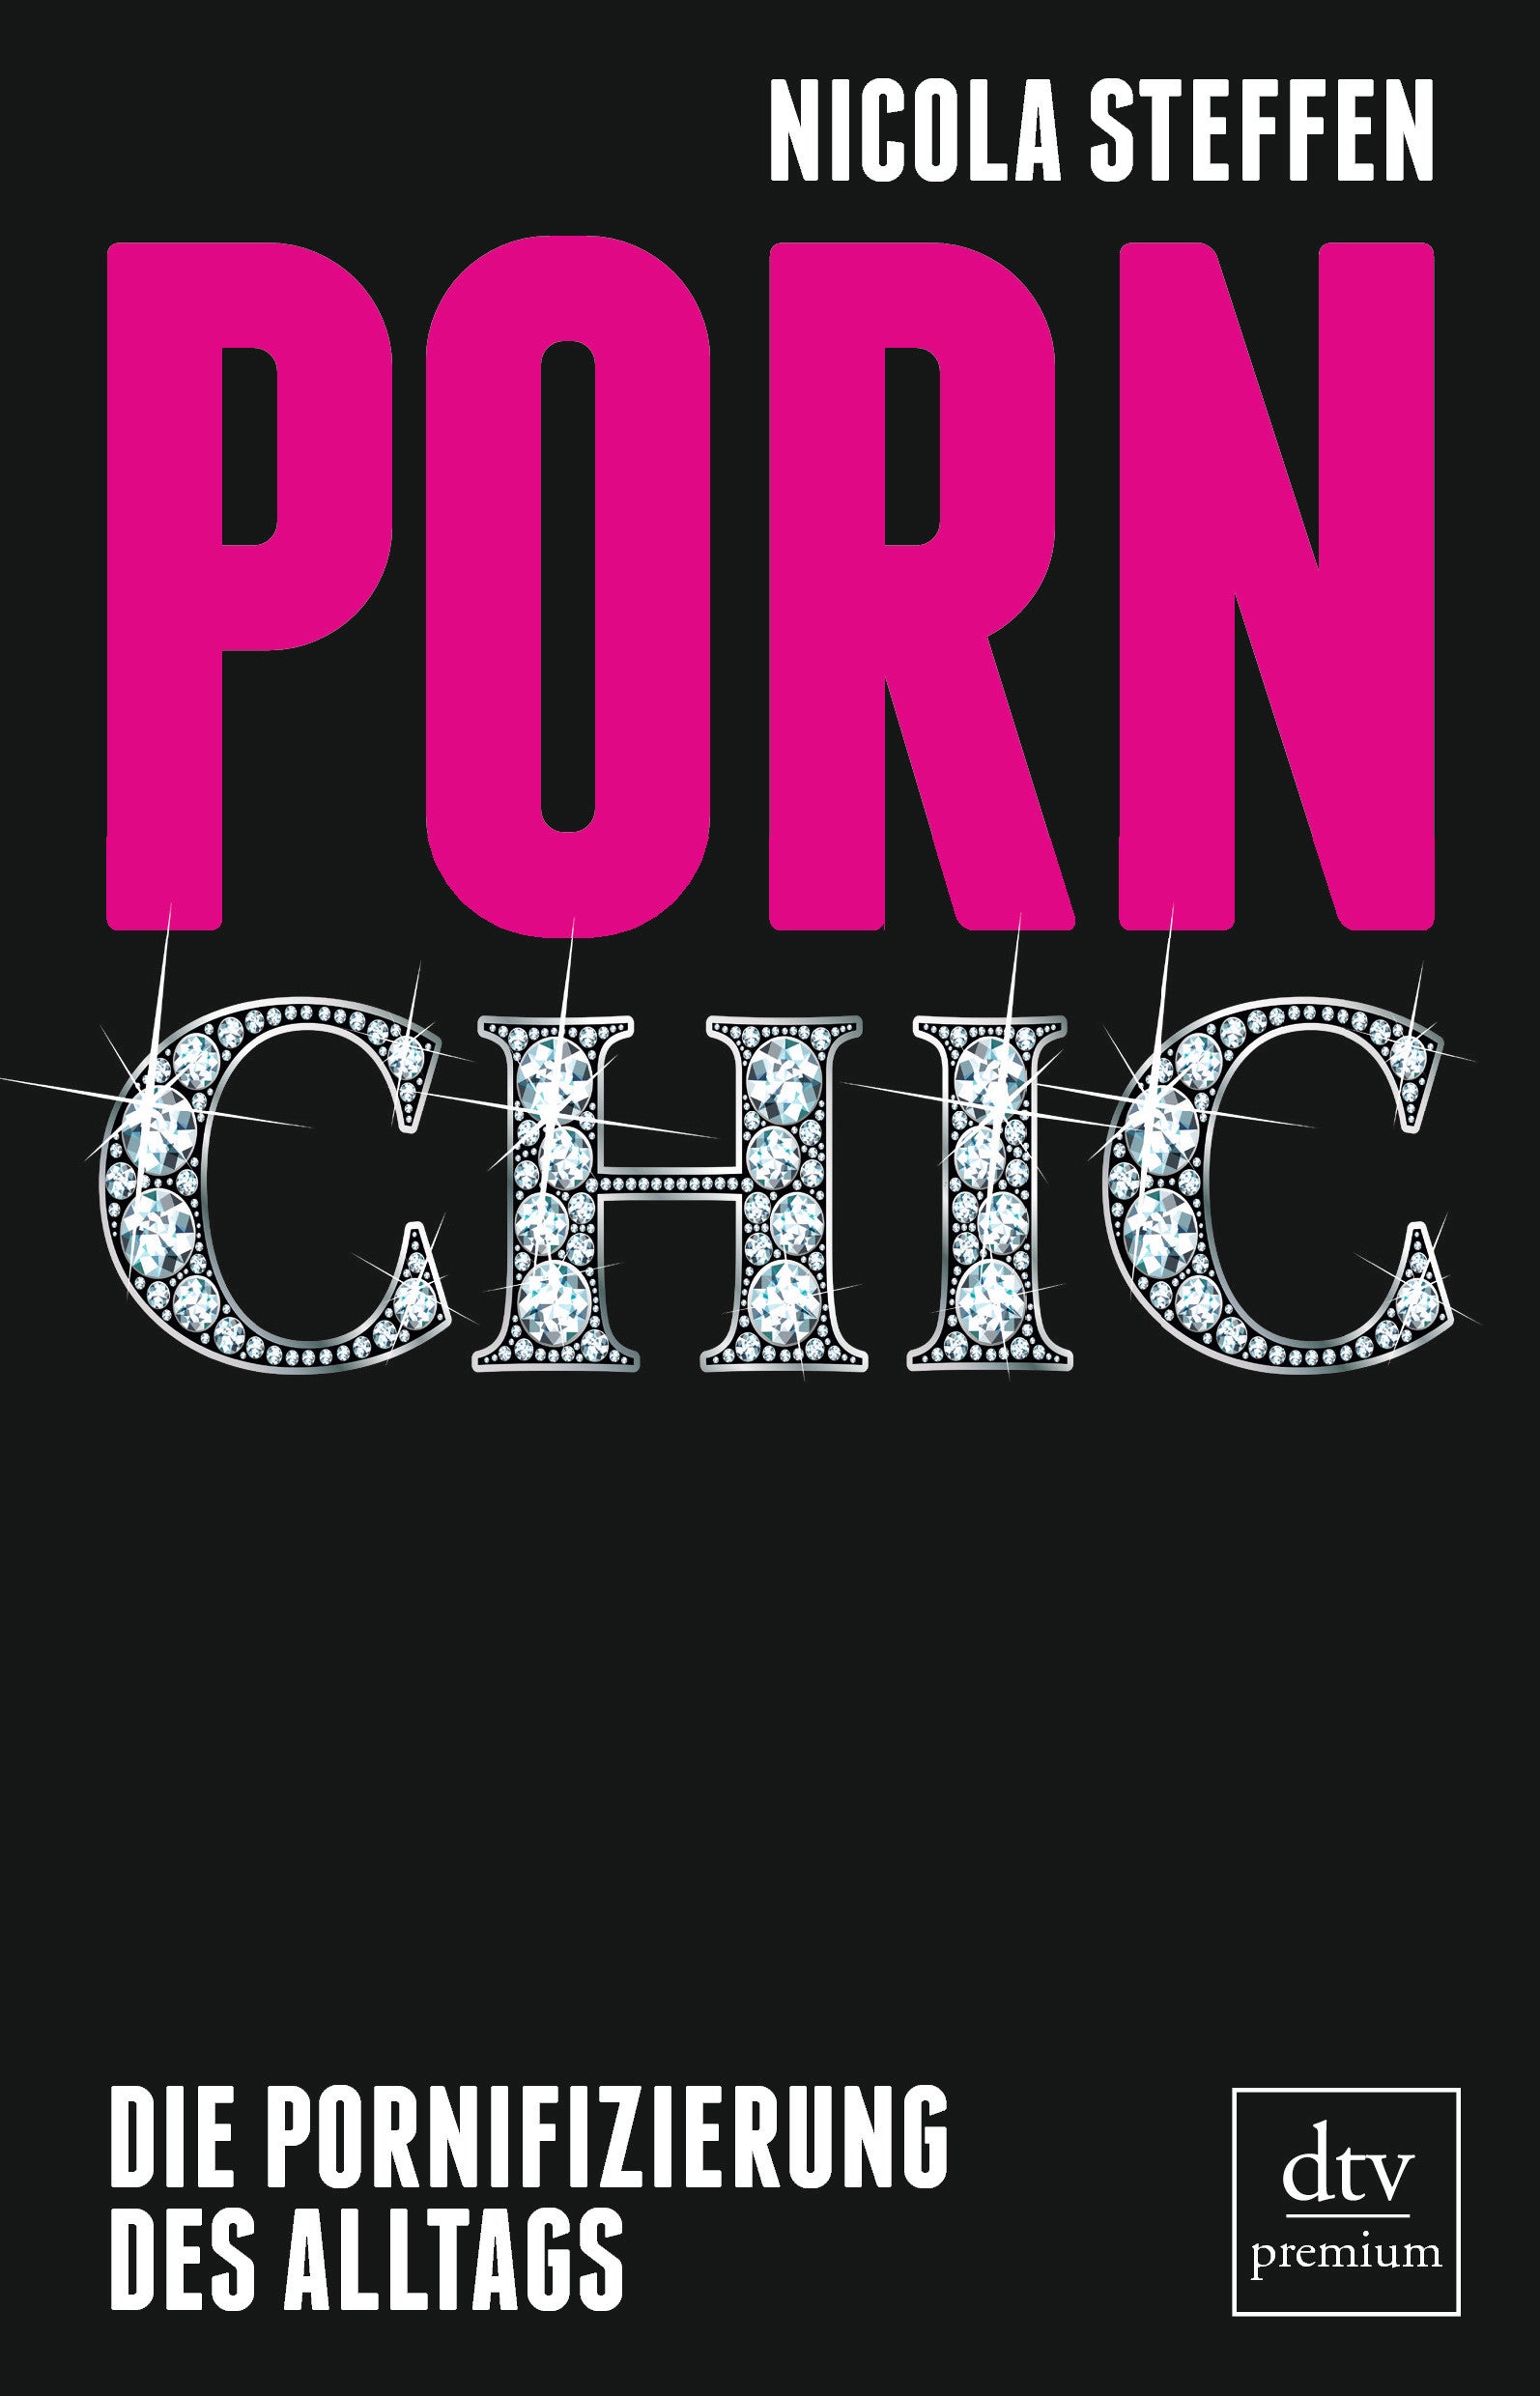 Porn Chic